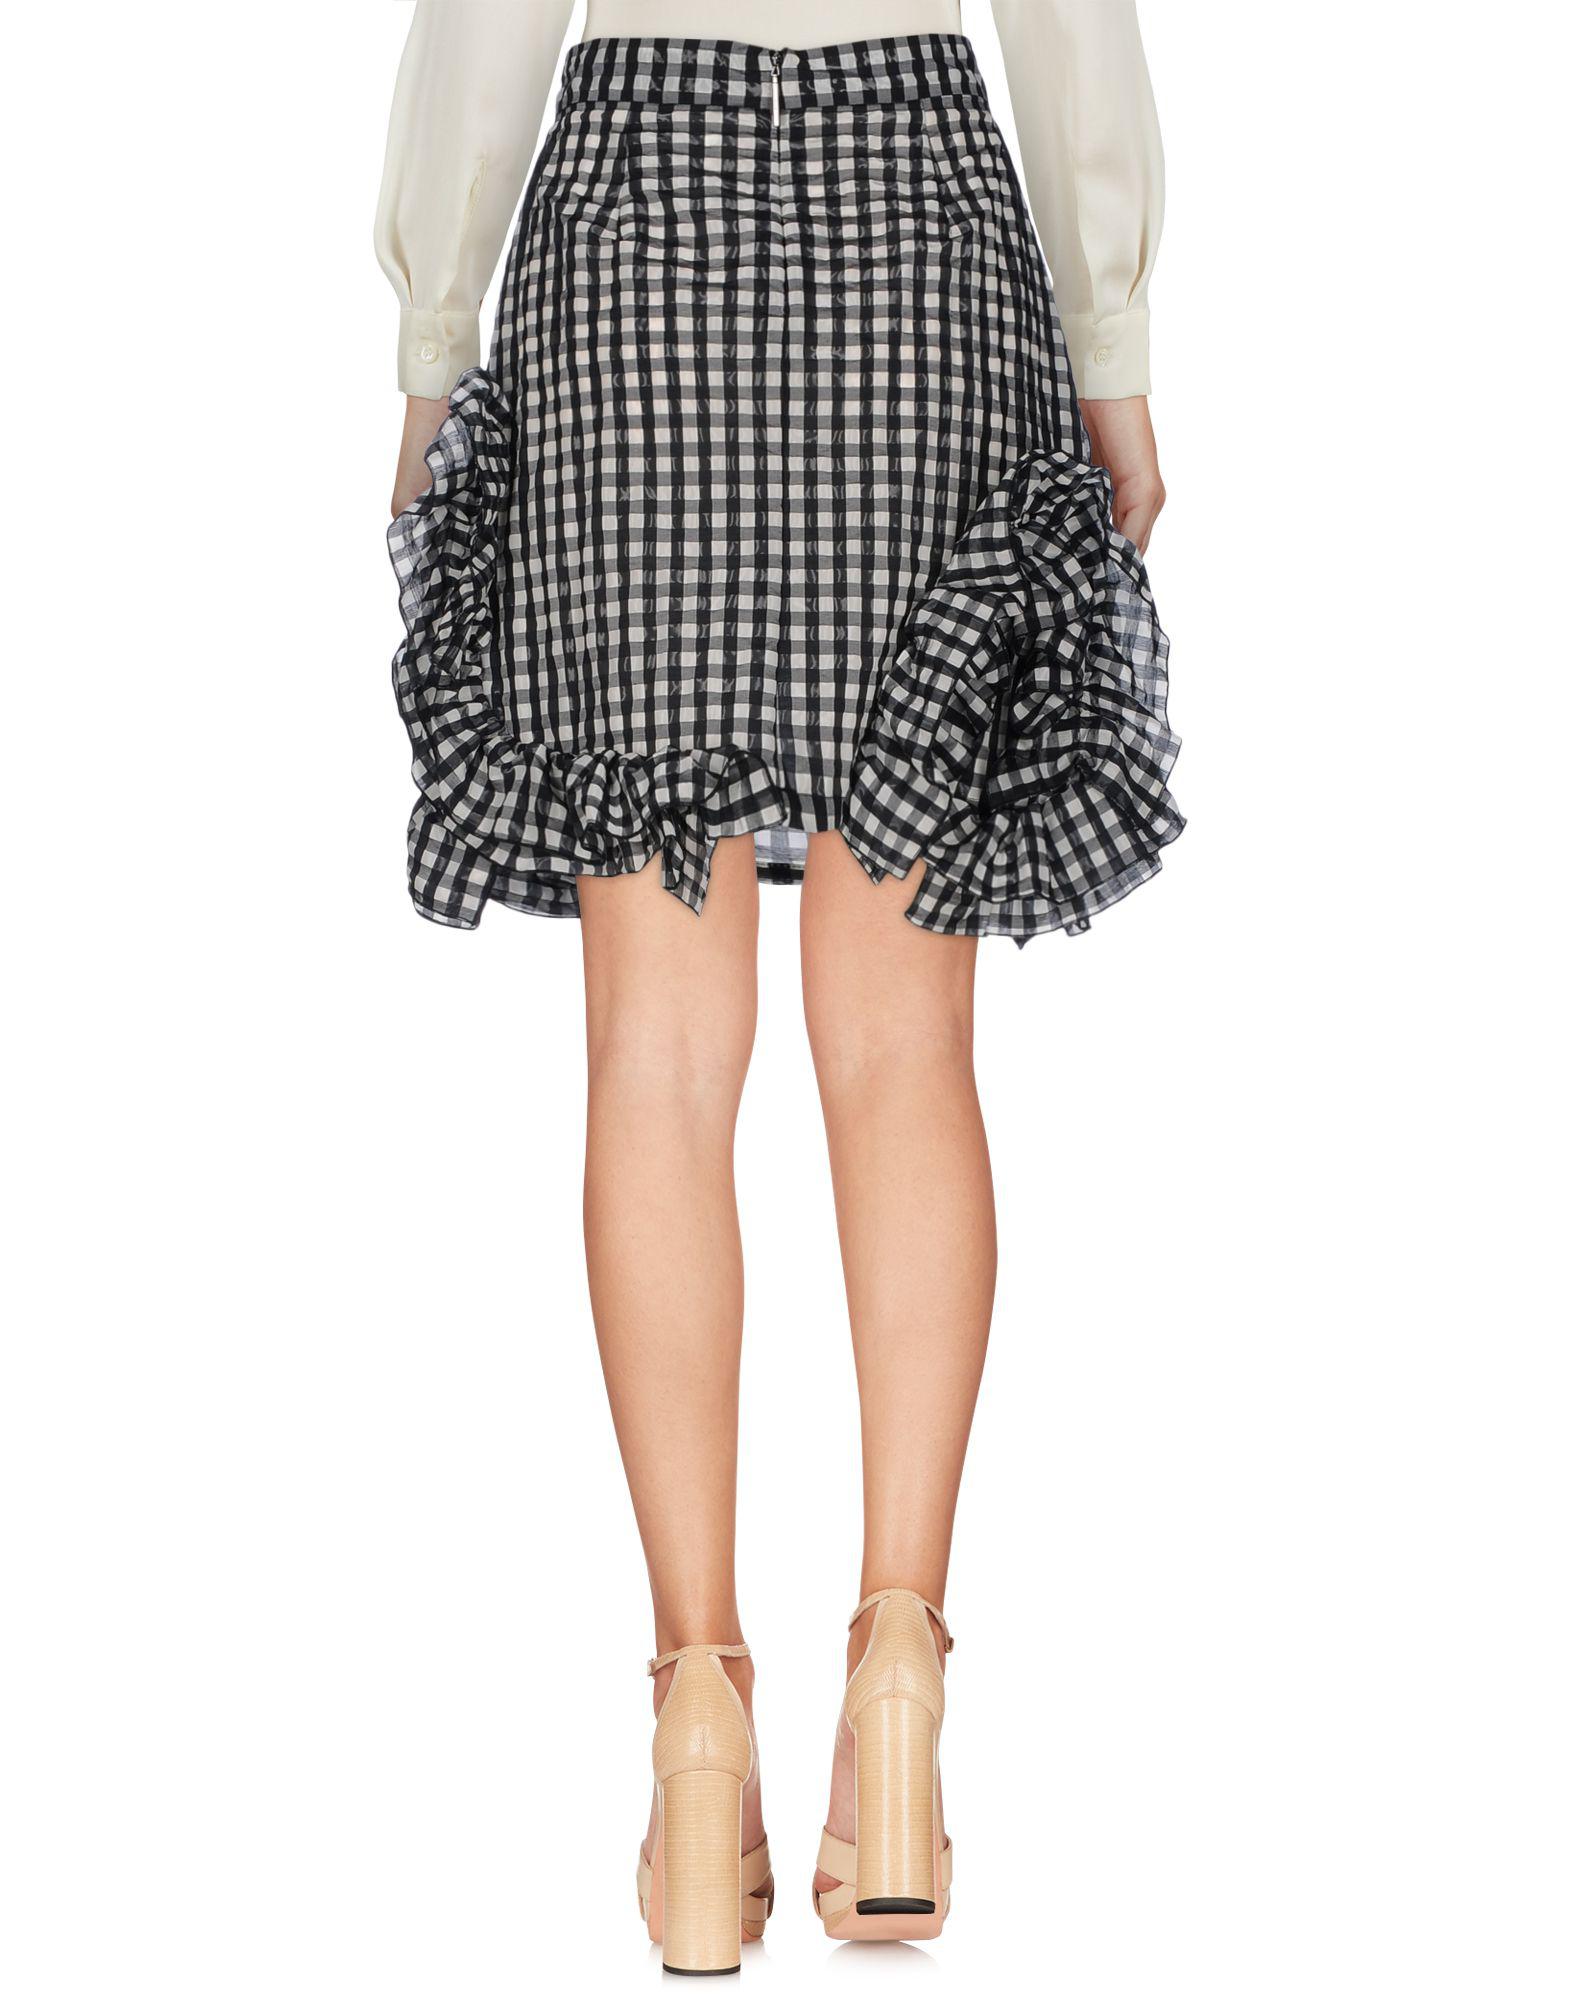 Lyst - MSGM Gingham Ruffle Mini Skirt in Black